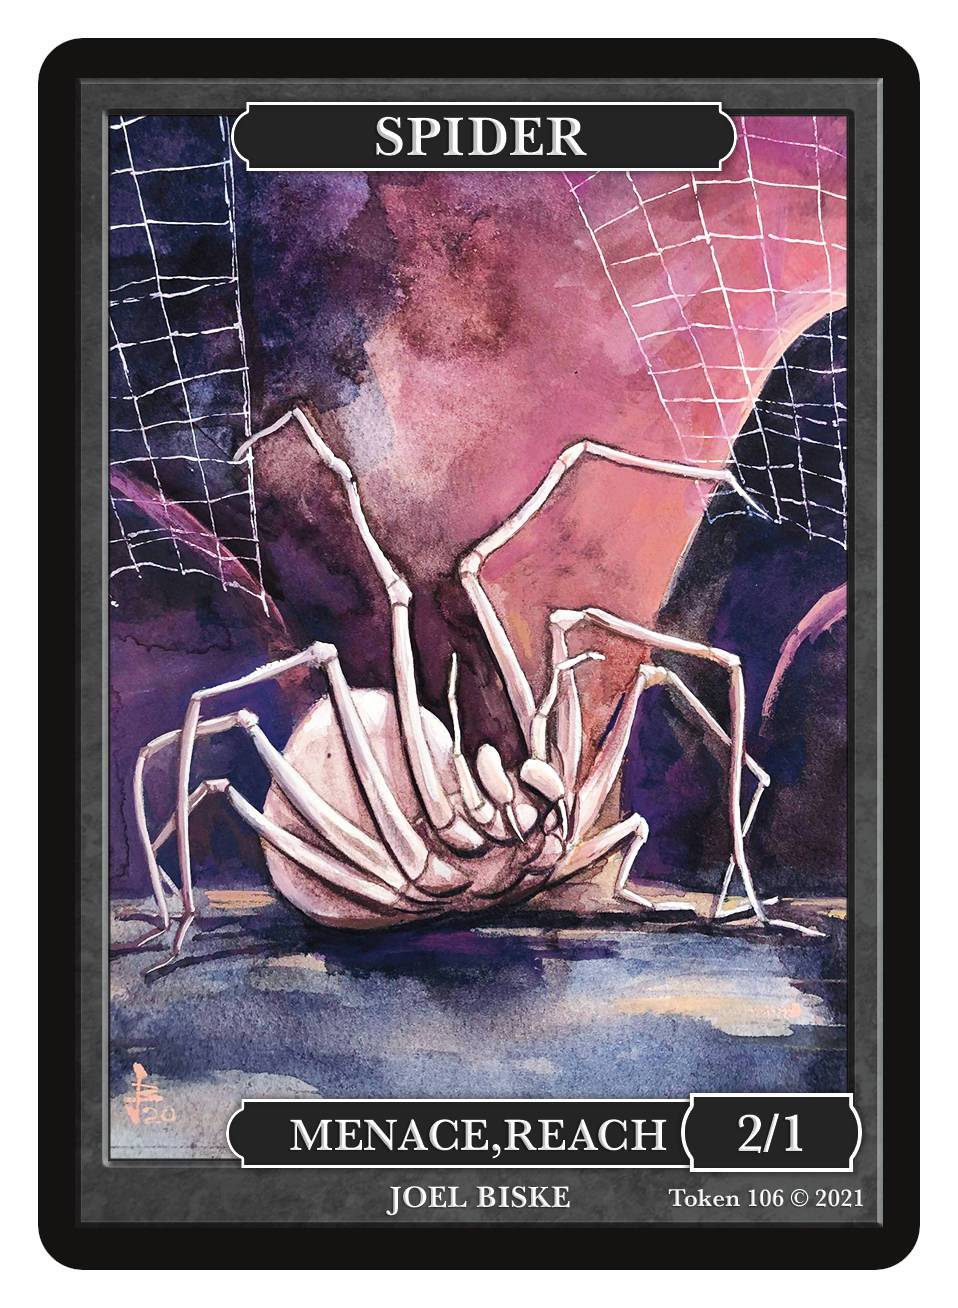 Spider Token (2/1 - Menace, Reach) by Joel Biske